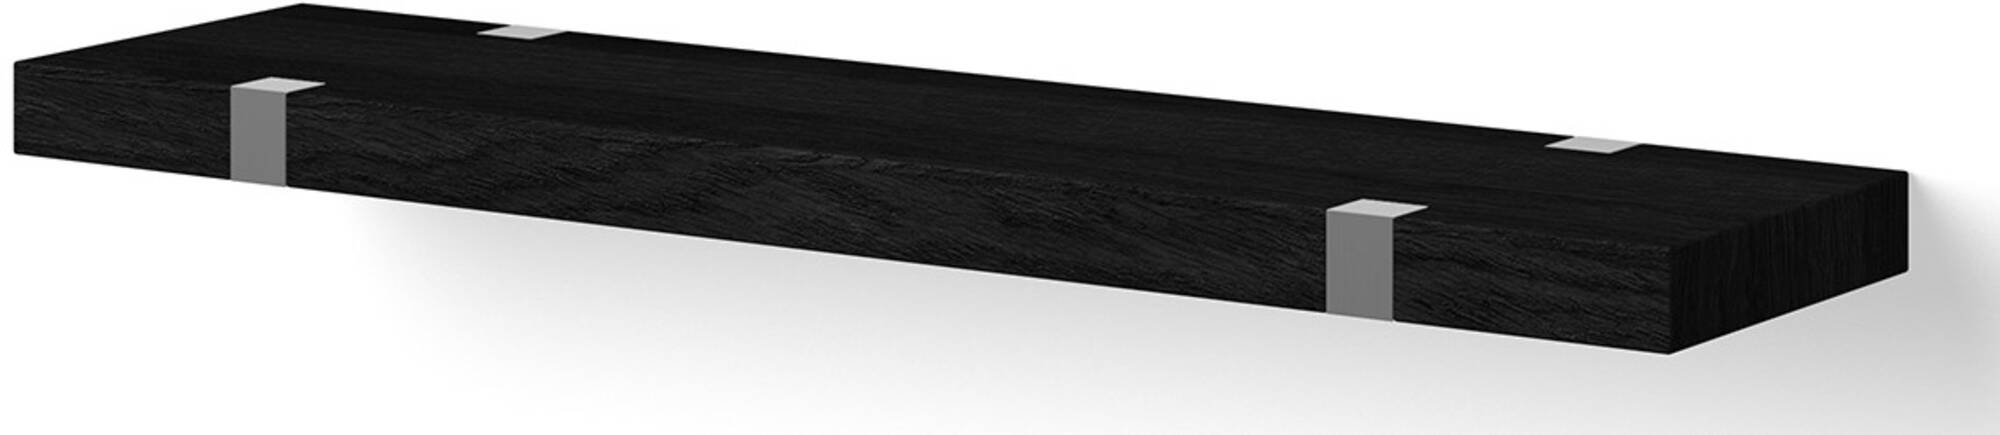 Looox Wooden Wall Shelf Solo Wandplank 60x15x3 cm Black / RVS